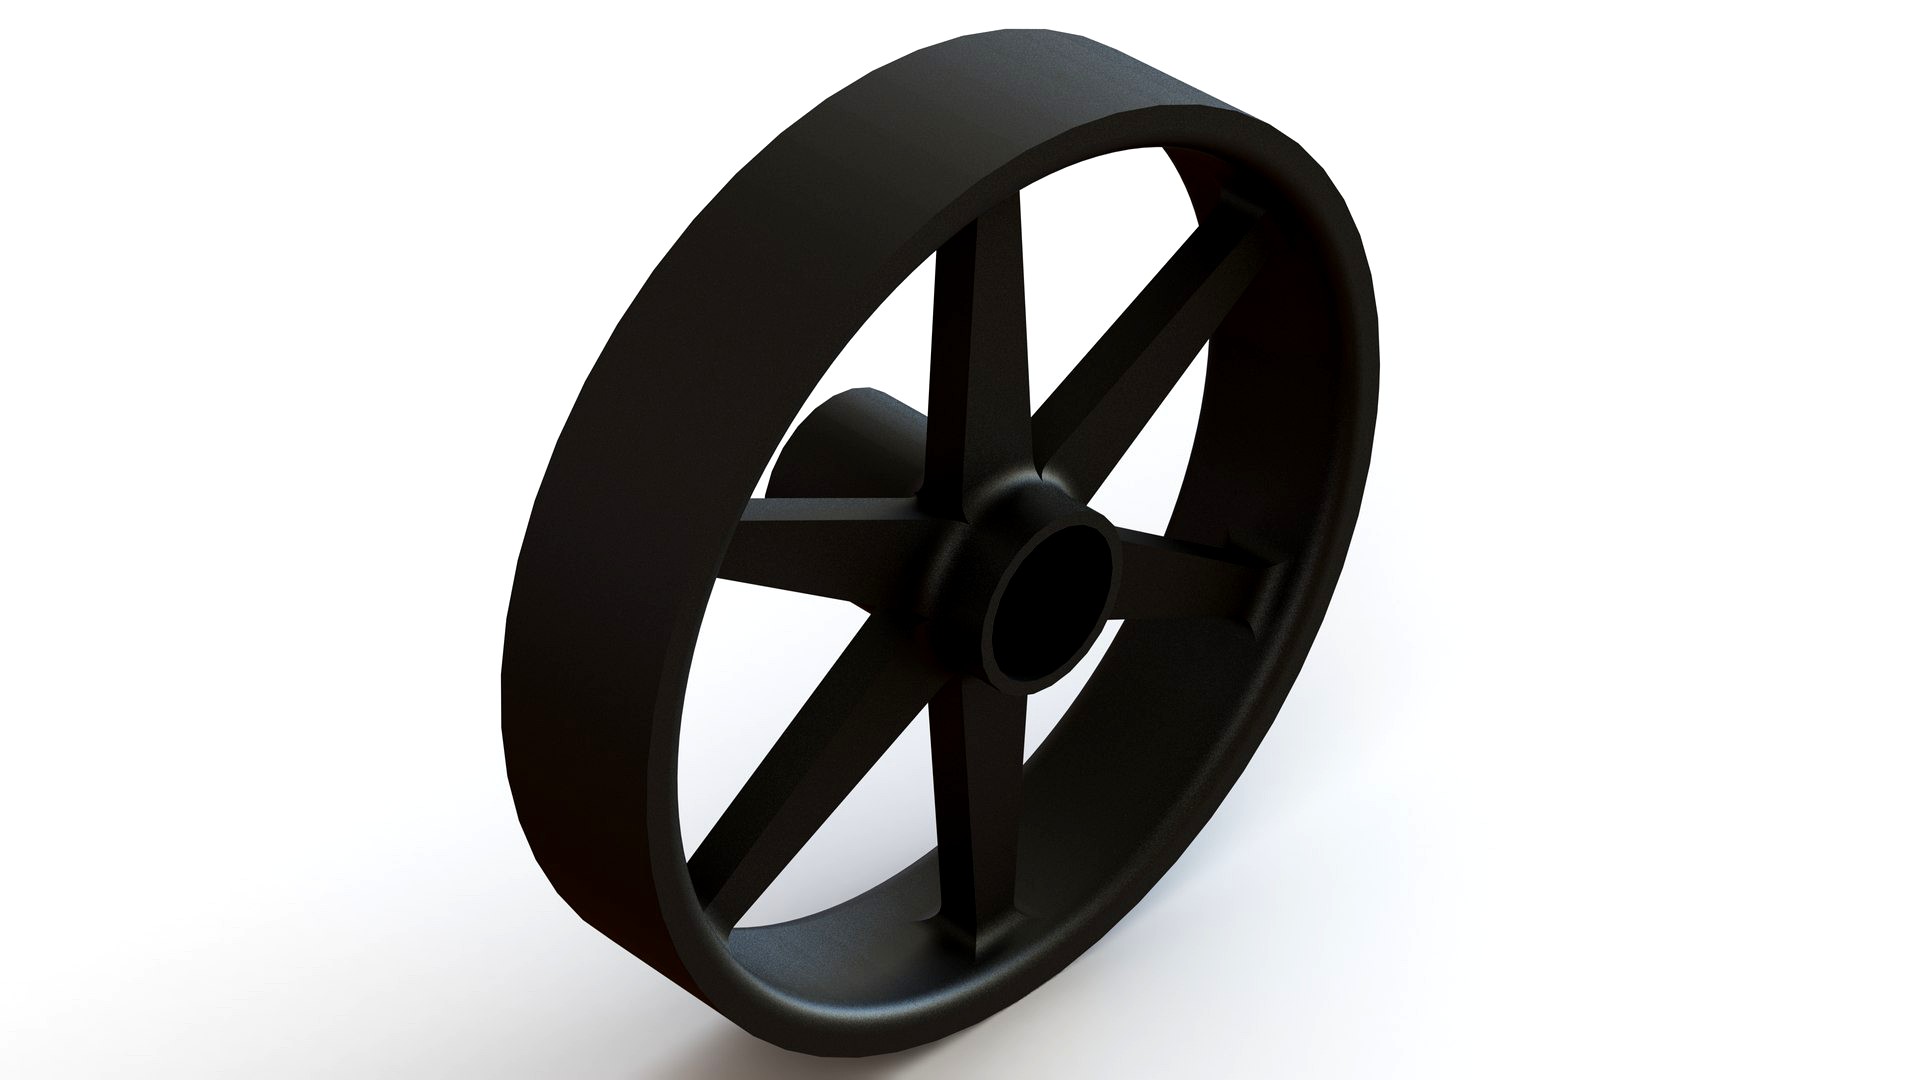 Briggs & Stratton Lawnmower Wheel Concept